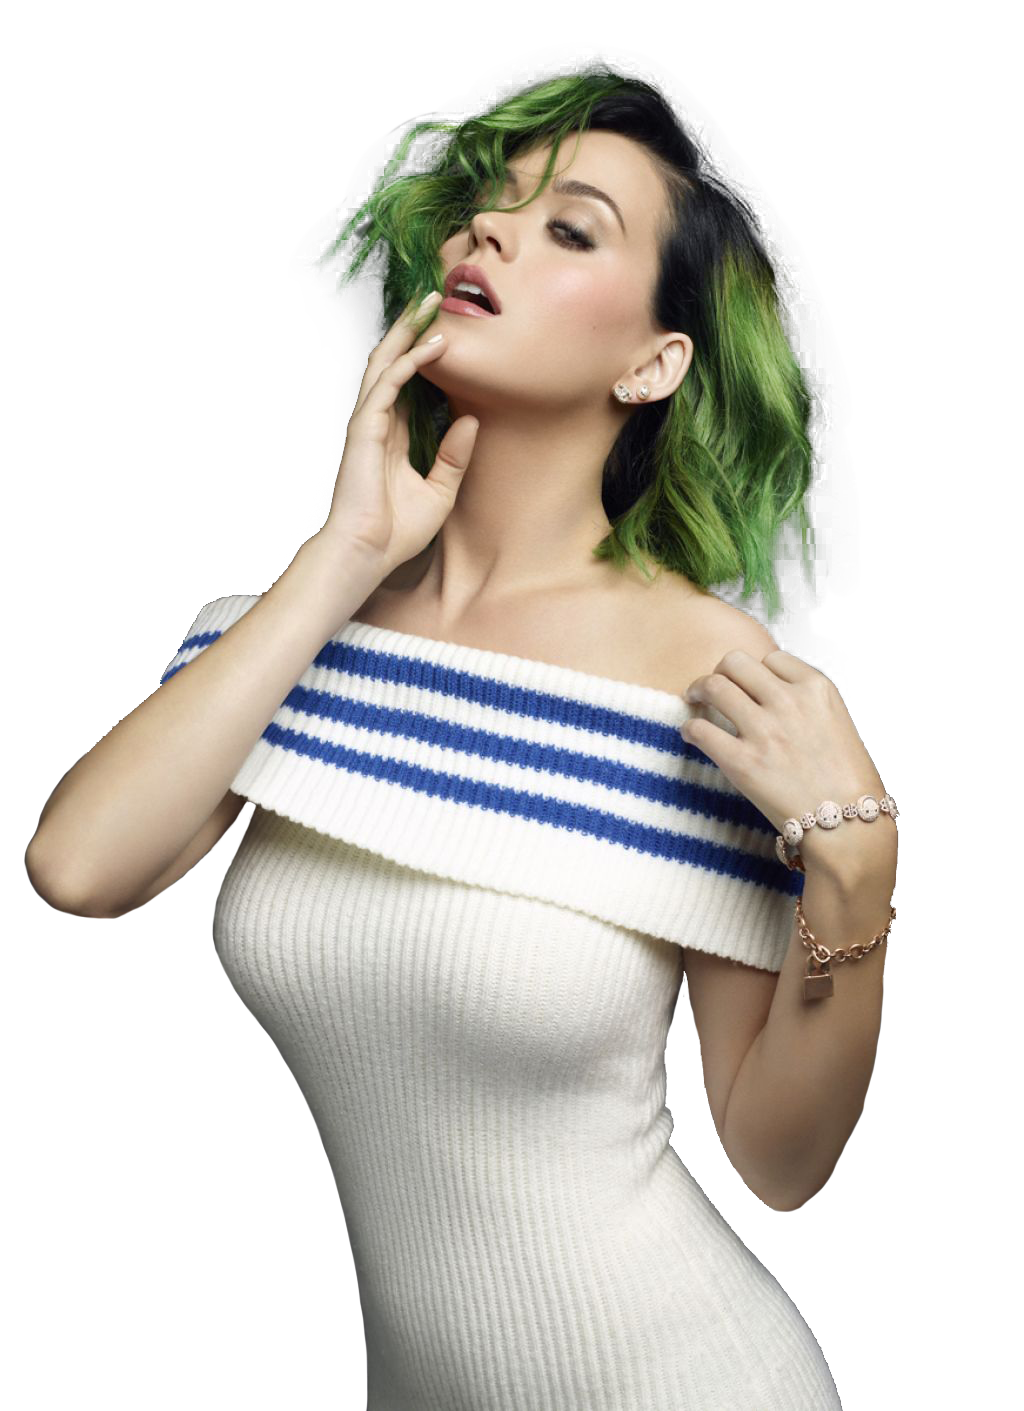 Hair Katy Perry Green HD Image Free PNG Image